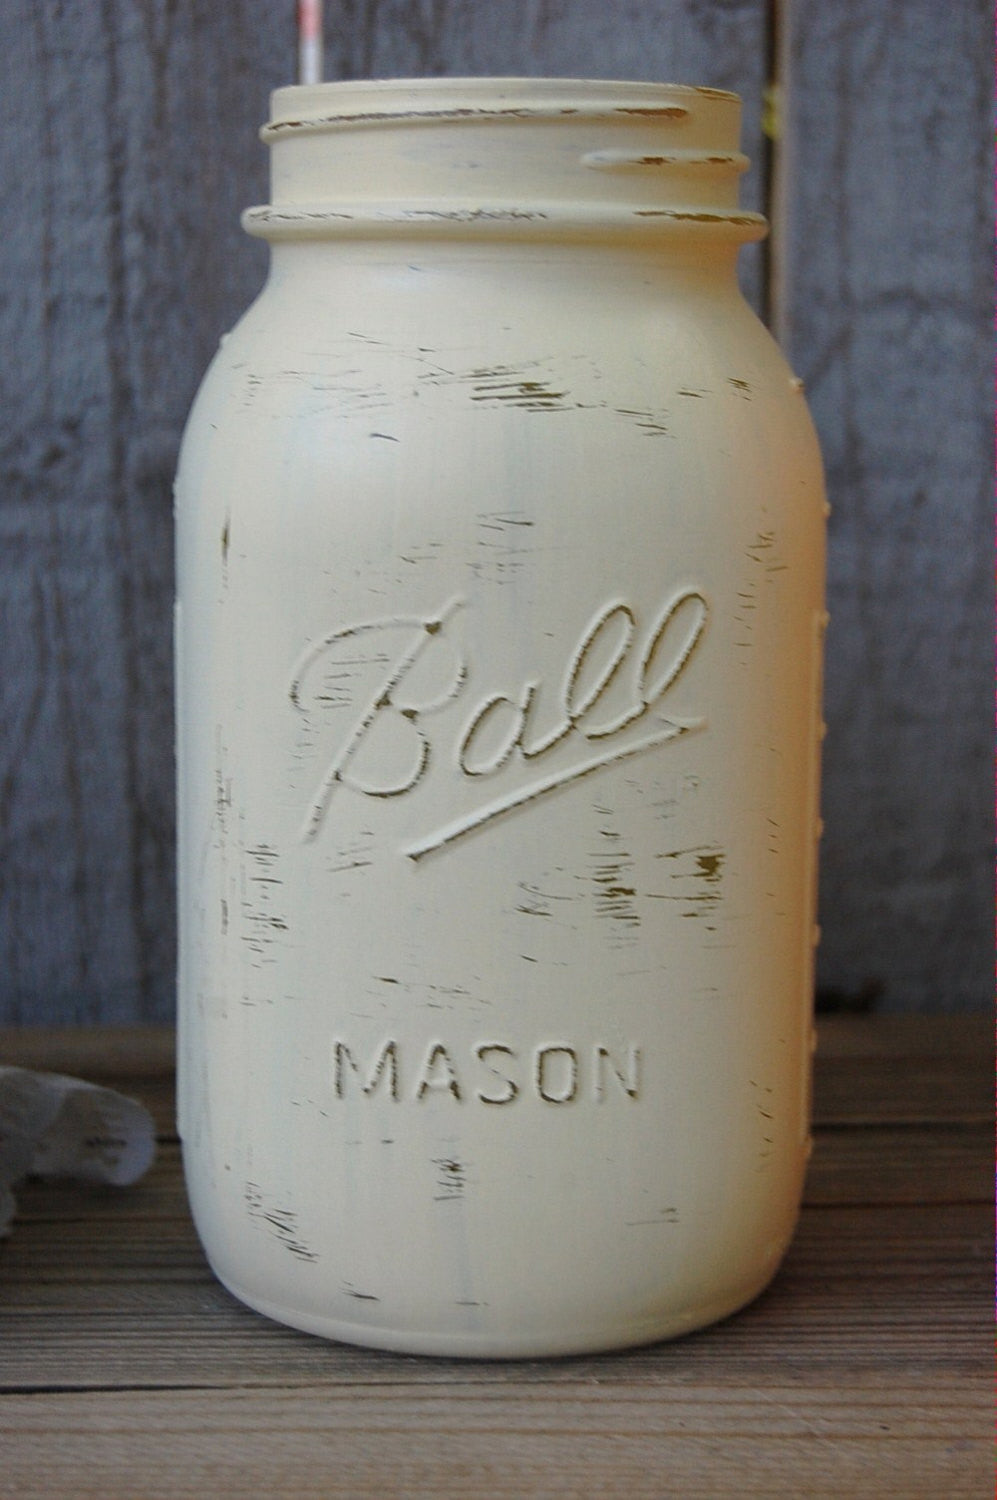 Shabby chic mason jars